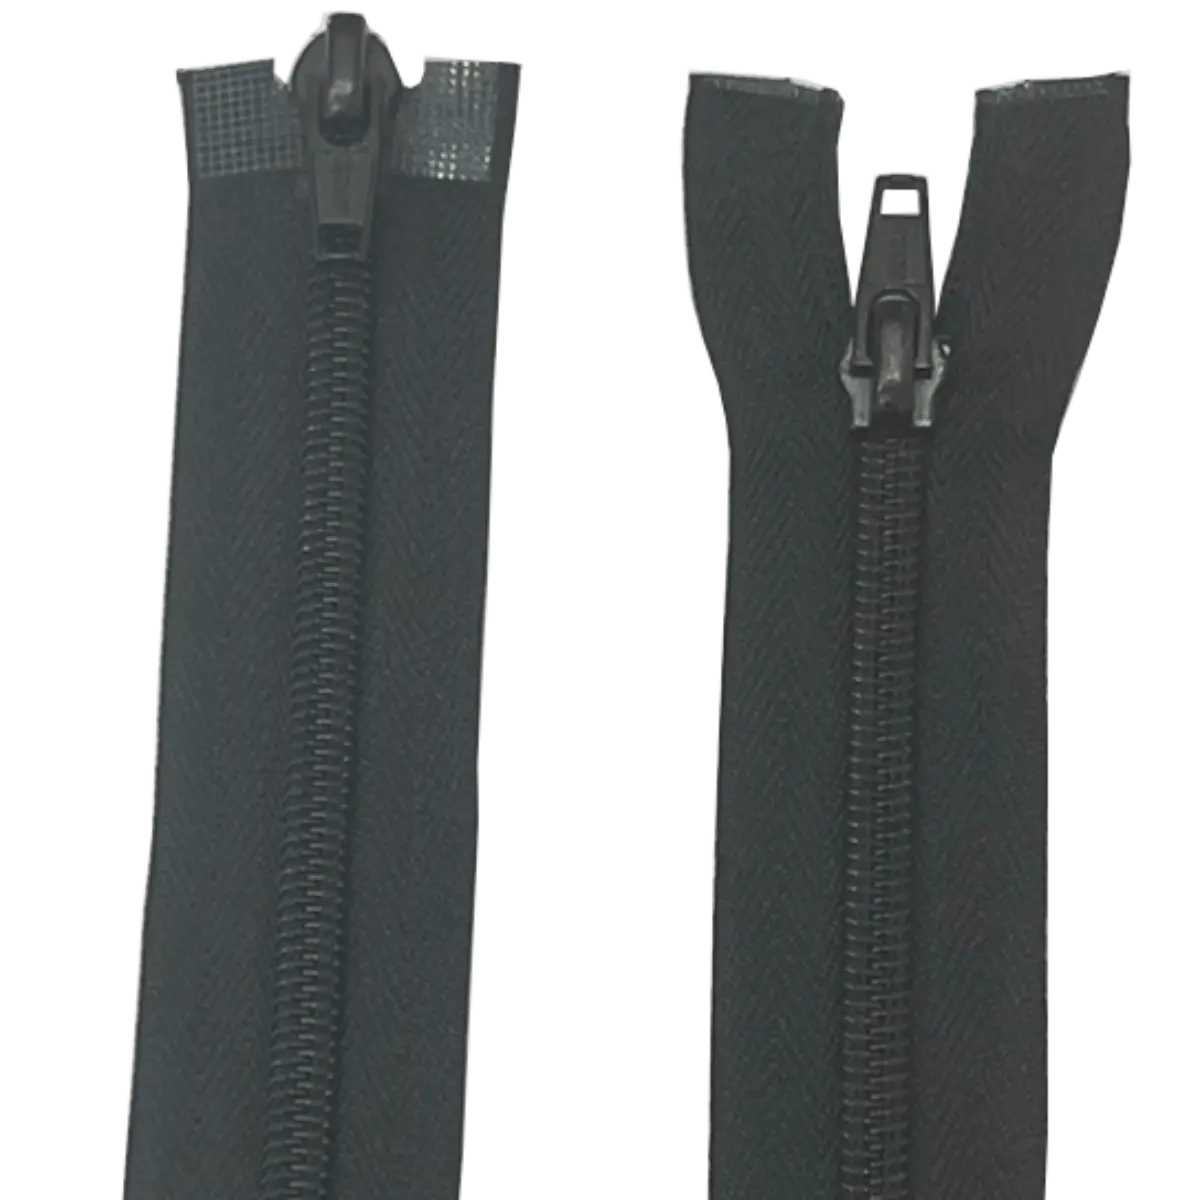 Double Slider 2 Way Nylon/Plastic Zip - With Metal Sliders 17" (43cm)